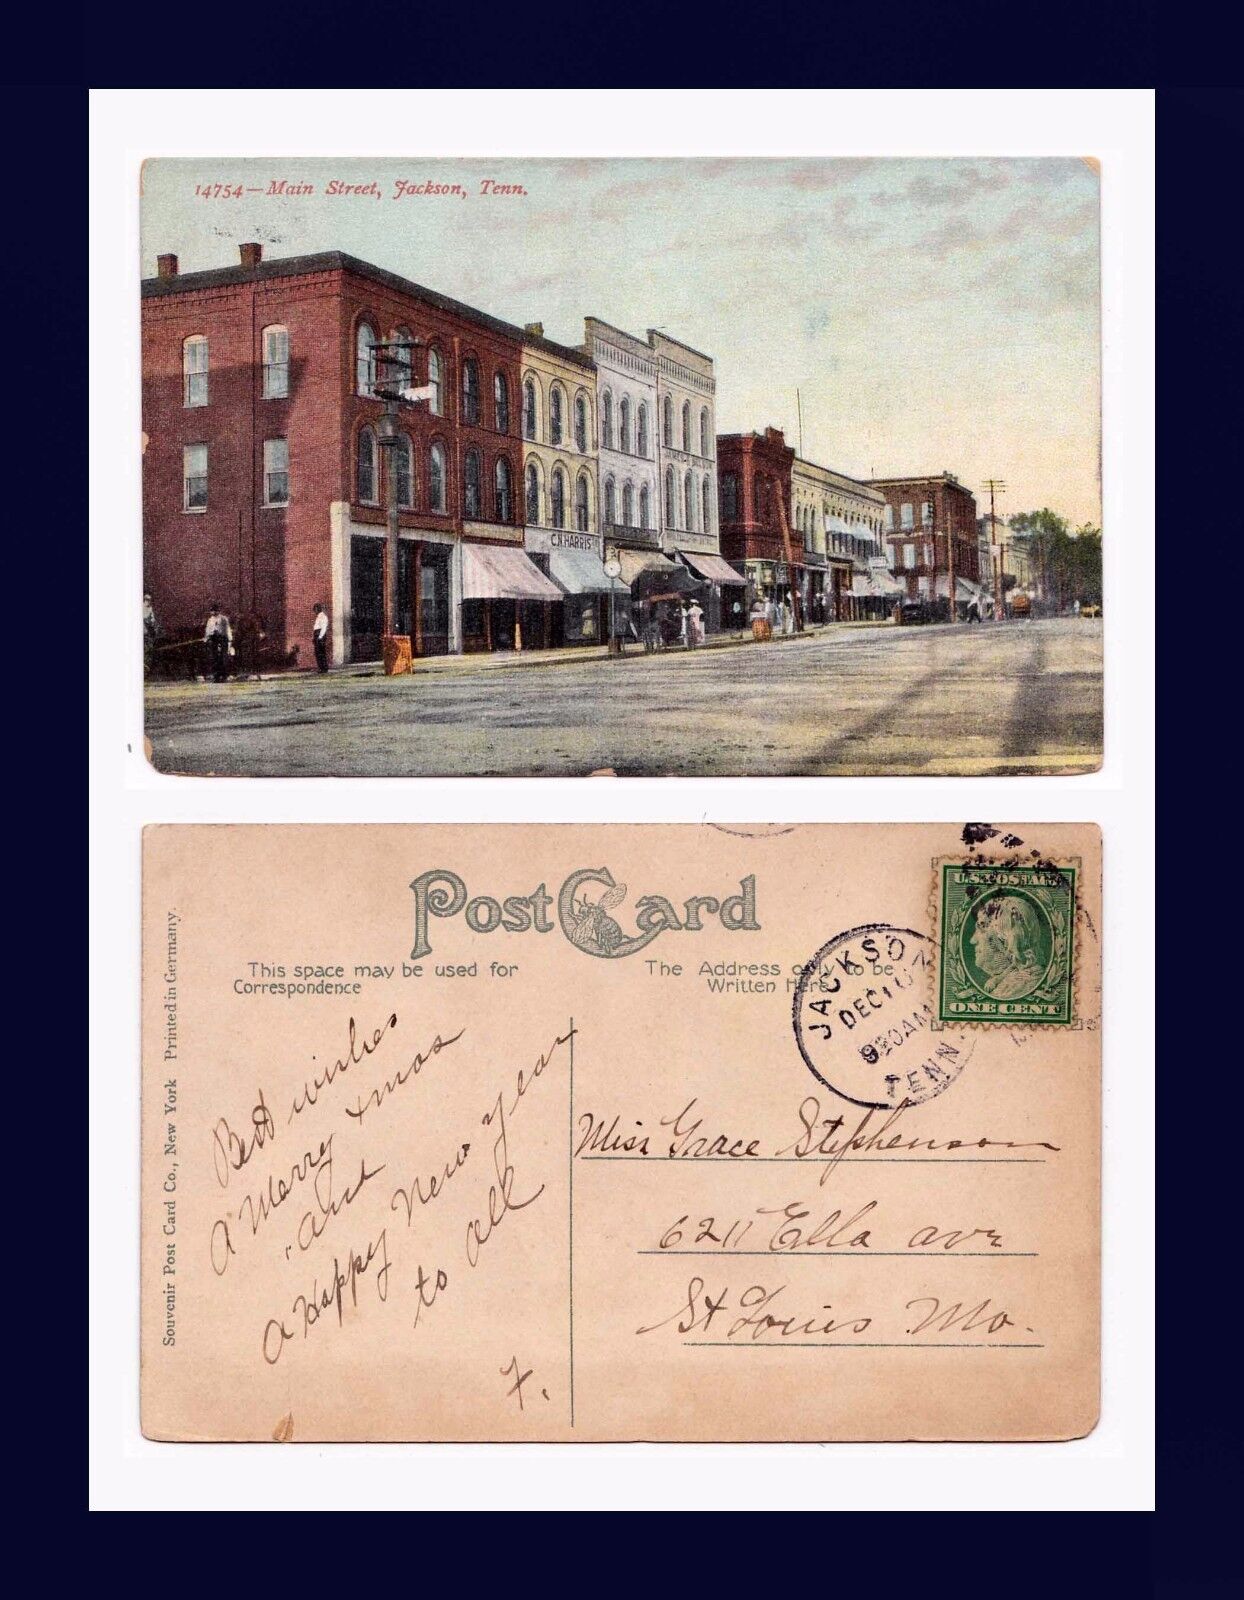 TENNESSEE JACKSON MAIN STREET 1912 TO MISS GRACE STEHPENSON, ST. LOUIS MISSOURI